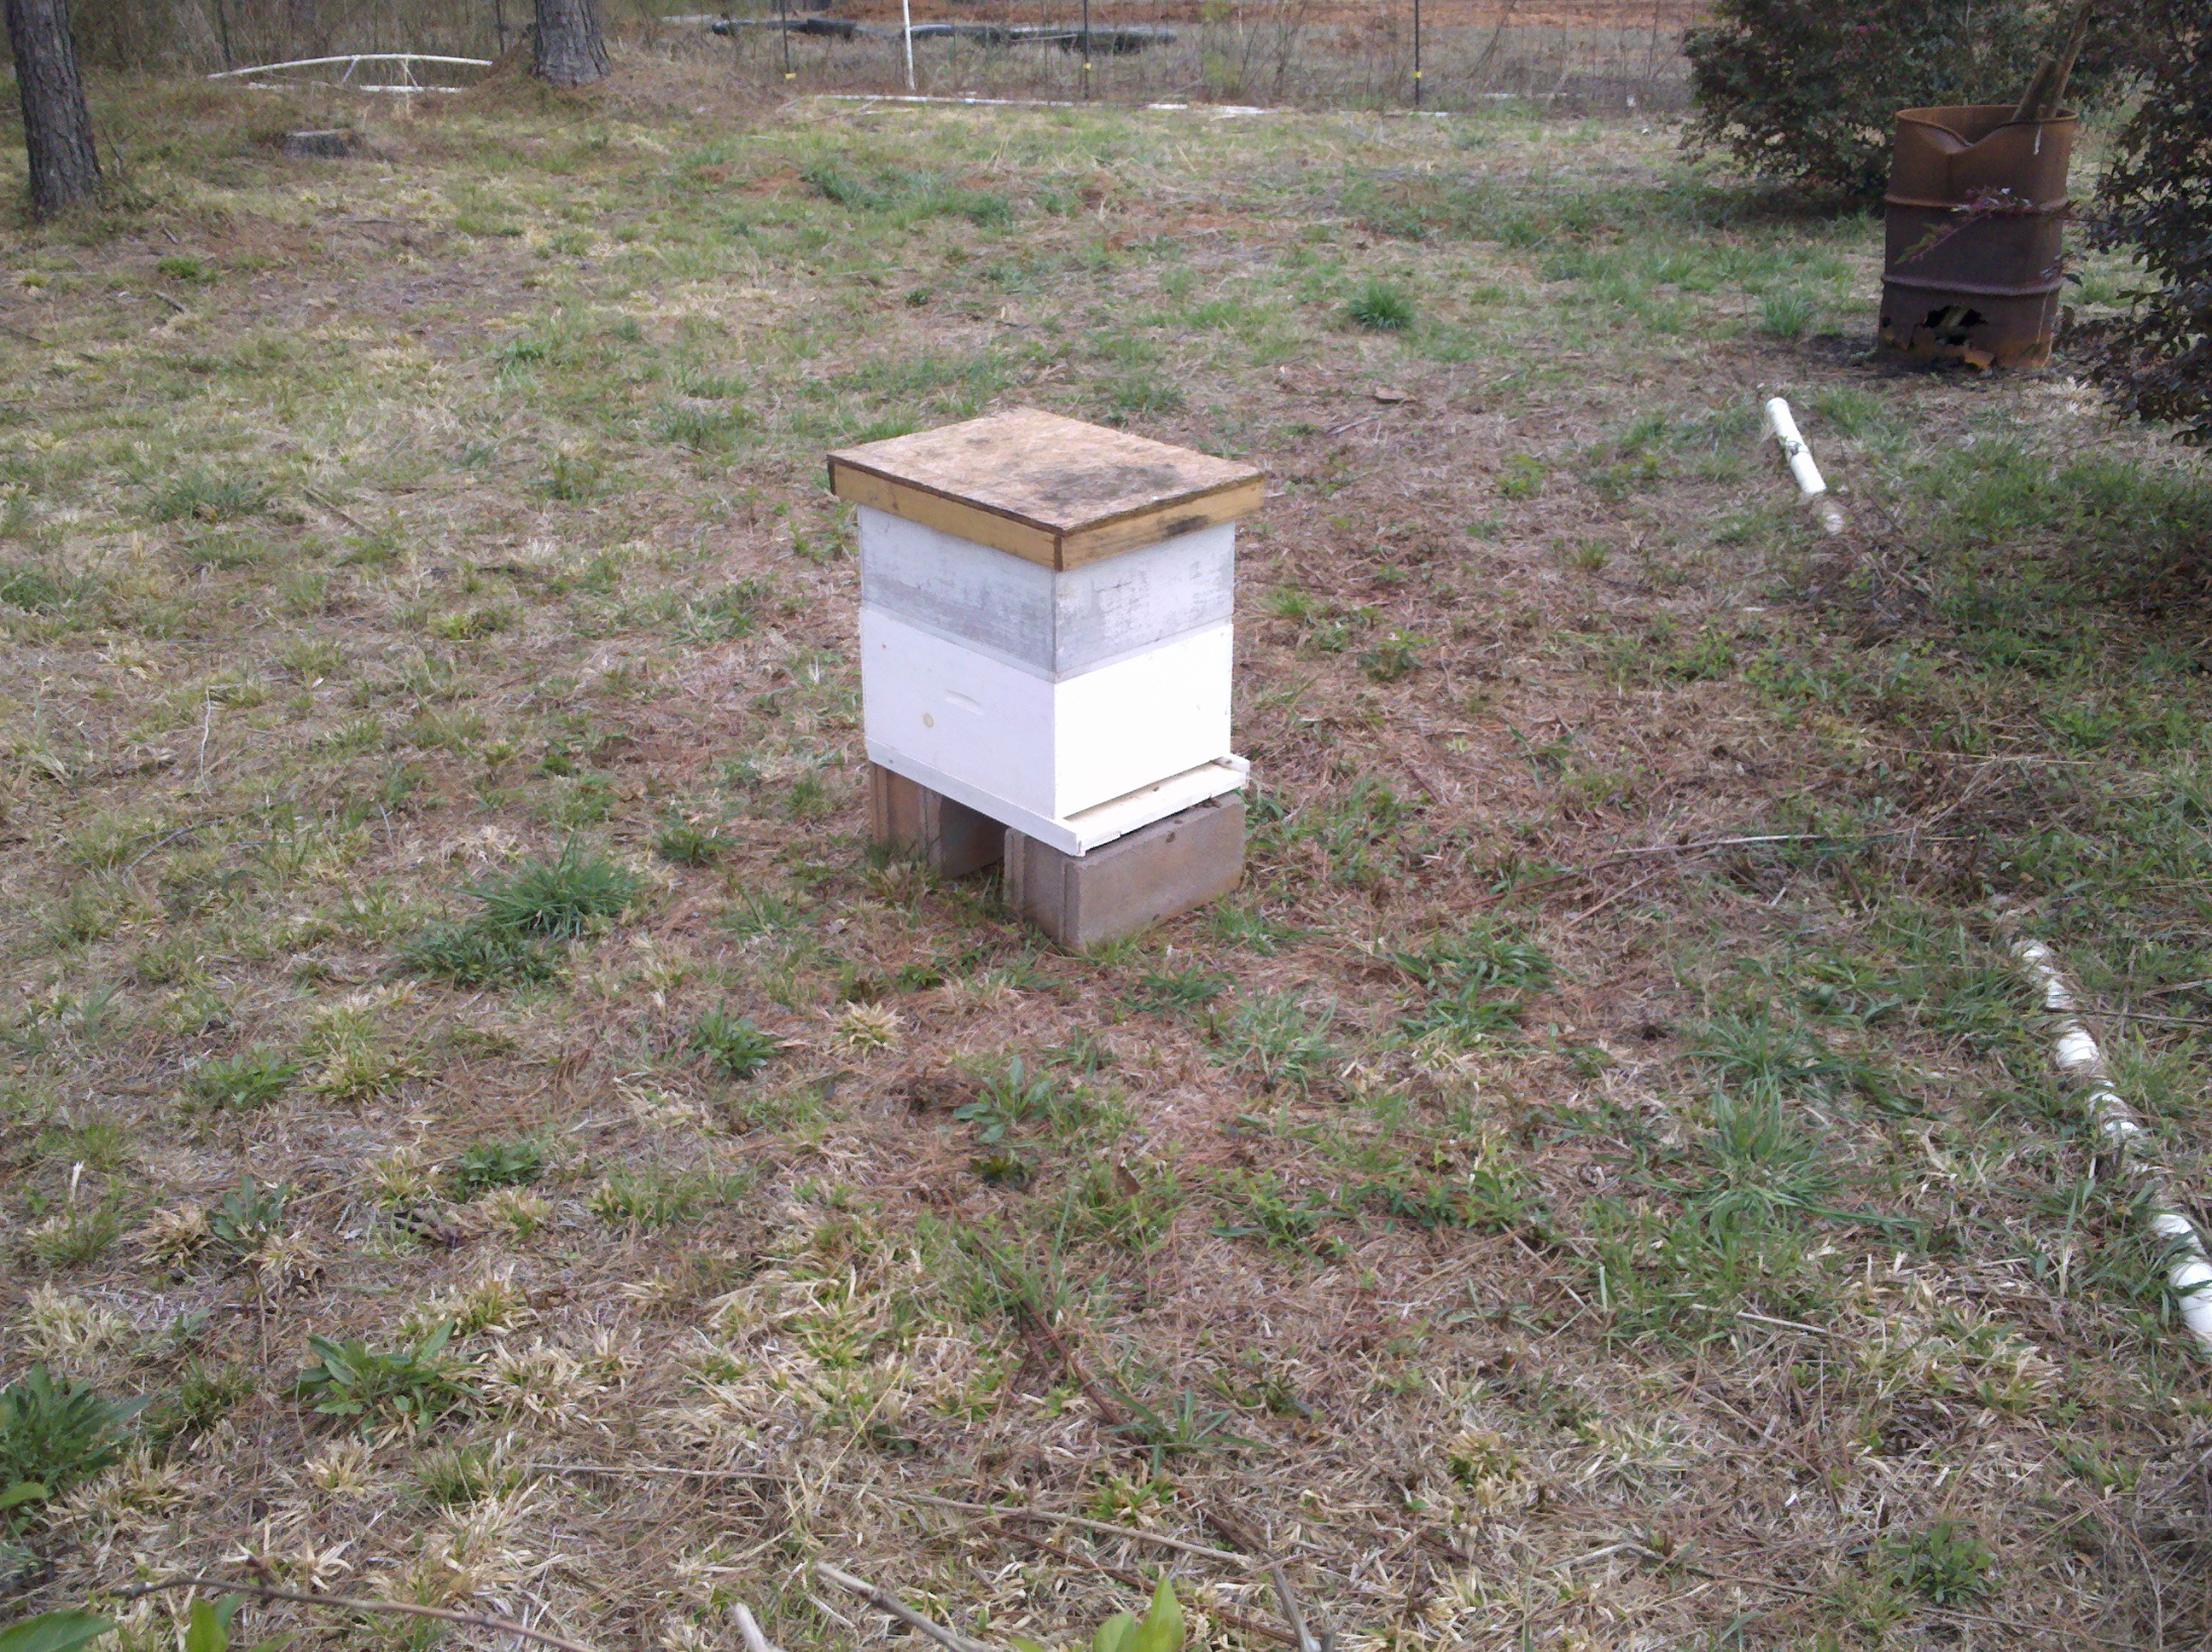 New hive